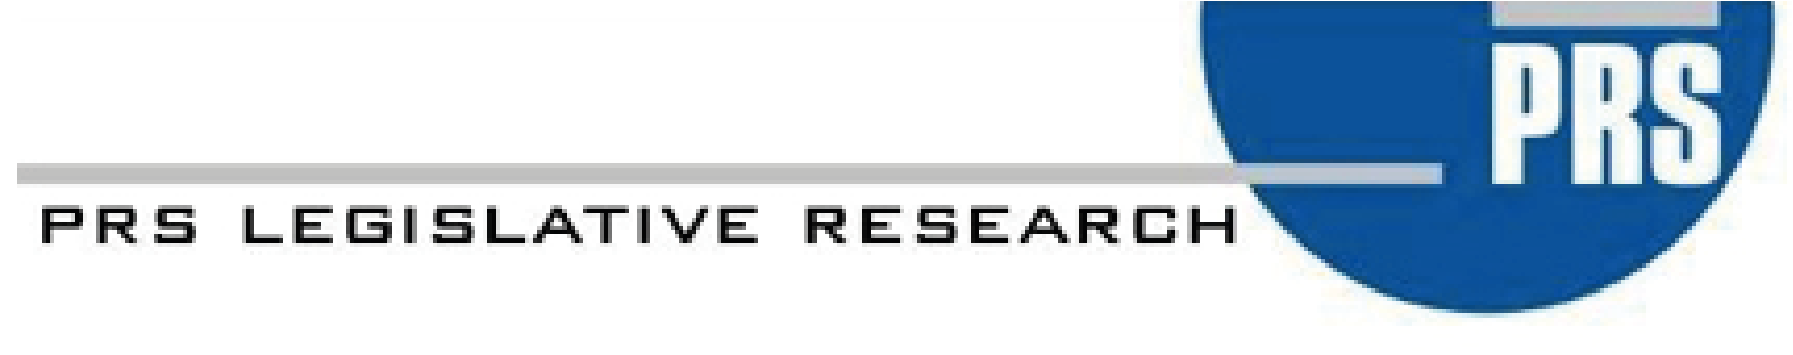 PRS Legislative Research logo